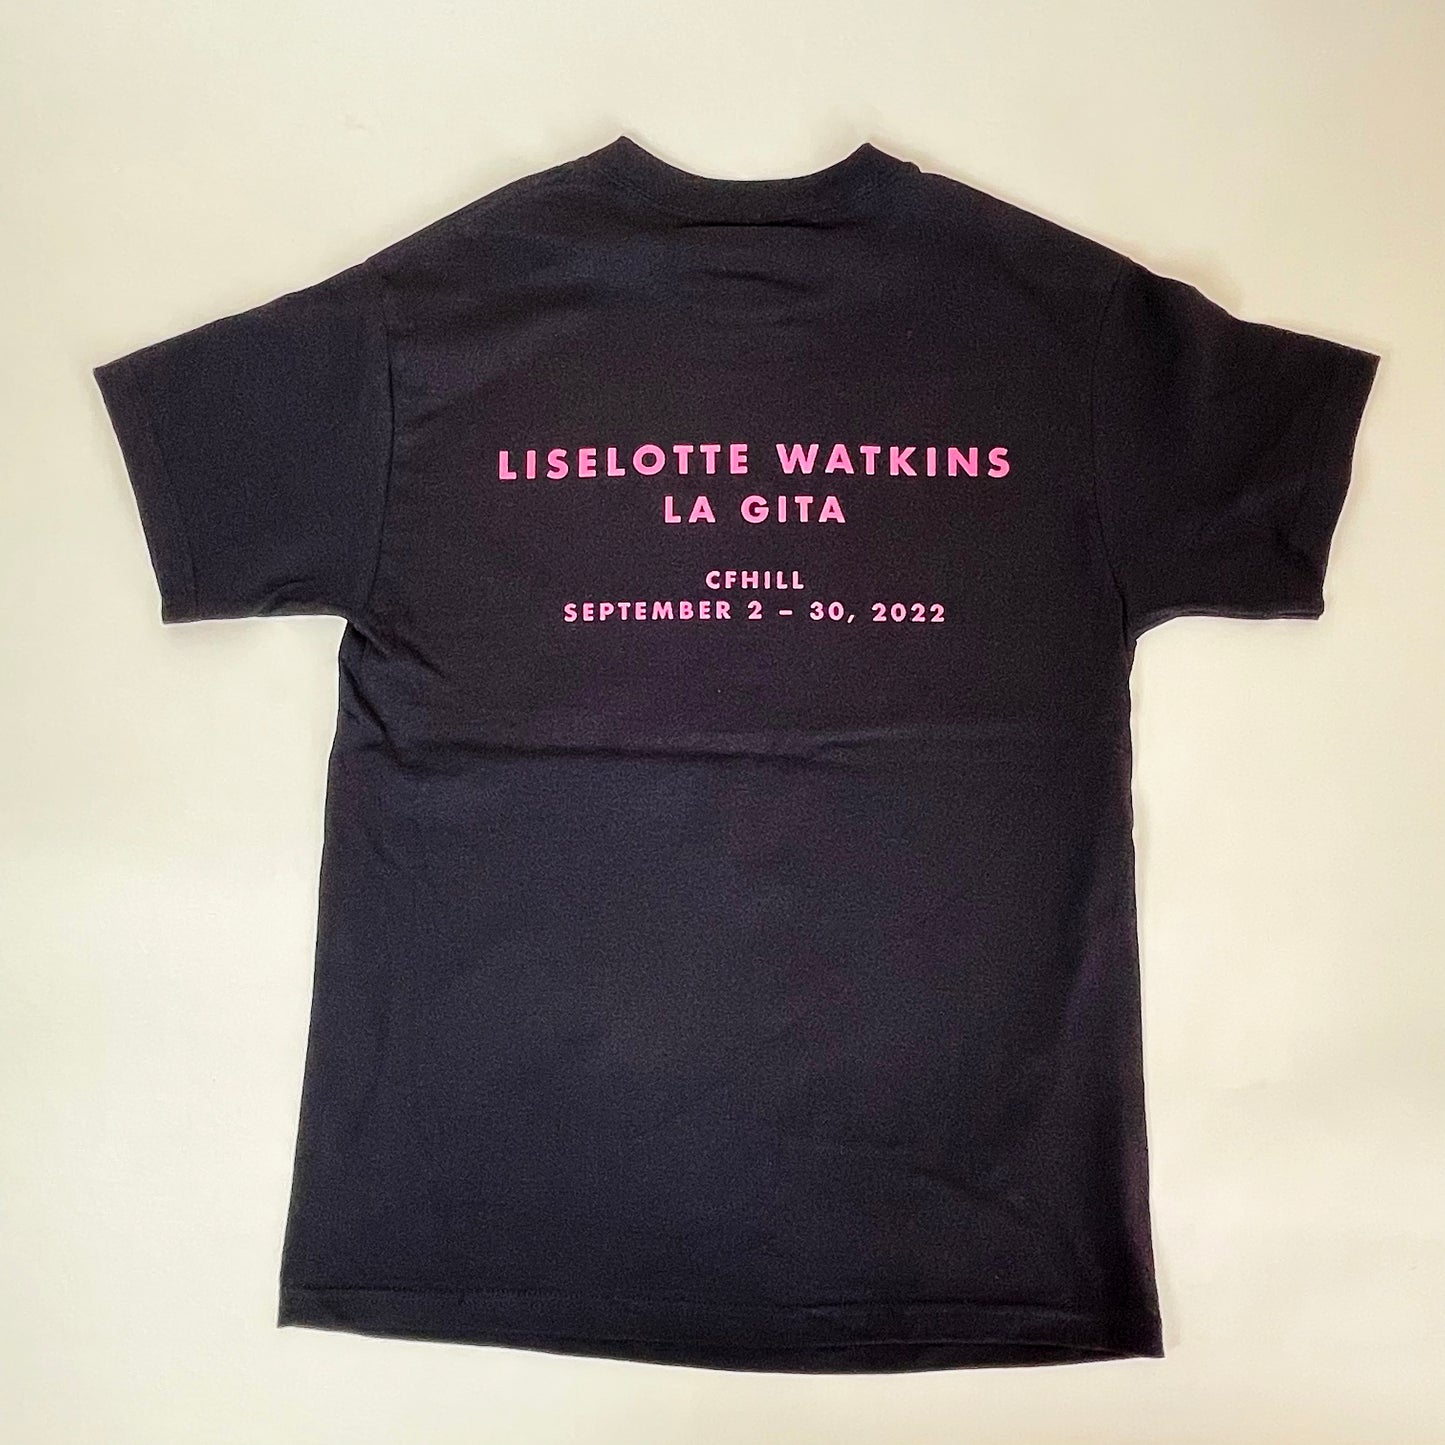 "La Gita - La Gioconda" T-shirt by Liselotte Watkins